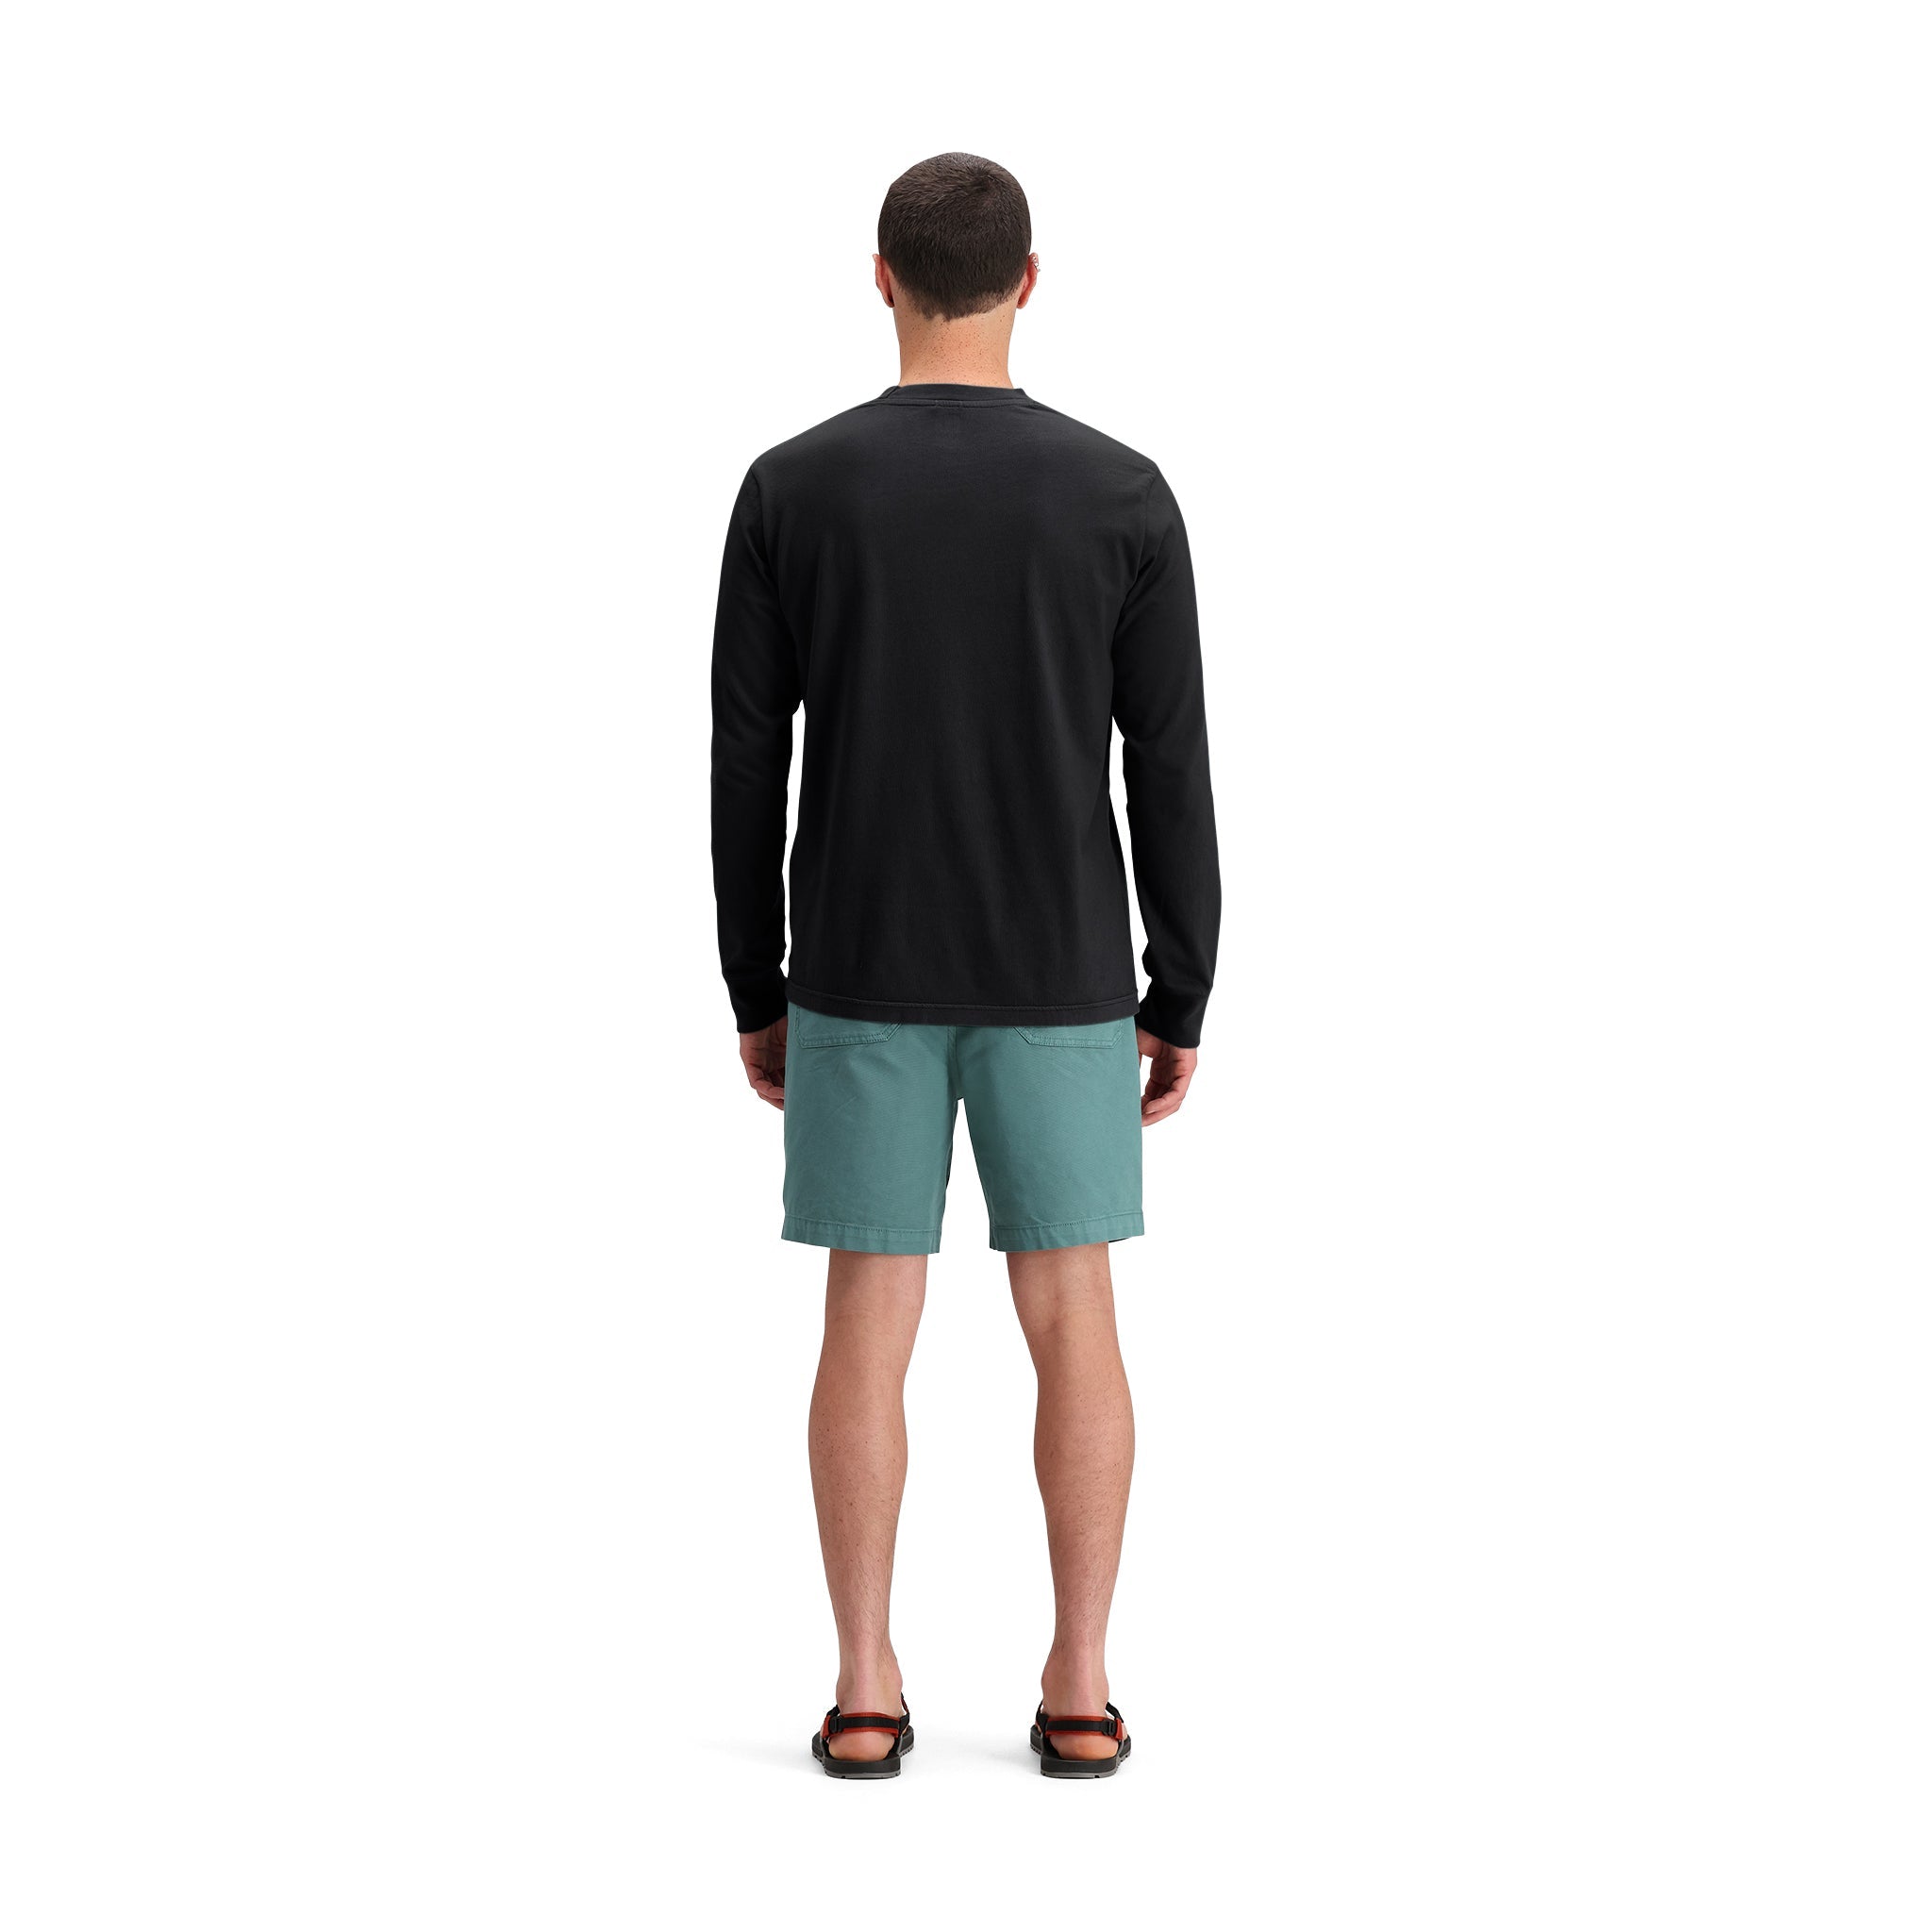 General back model shot of Topo Designs Dirt Shorts - Men's in "Sea Pine"